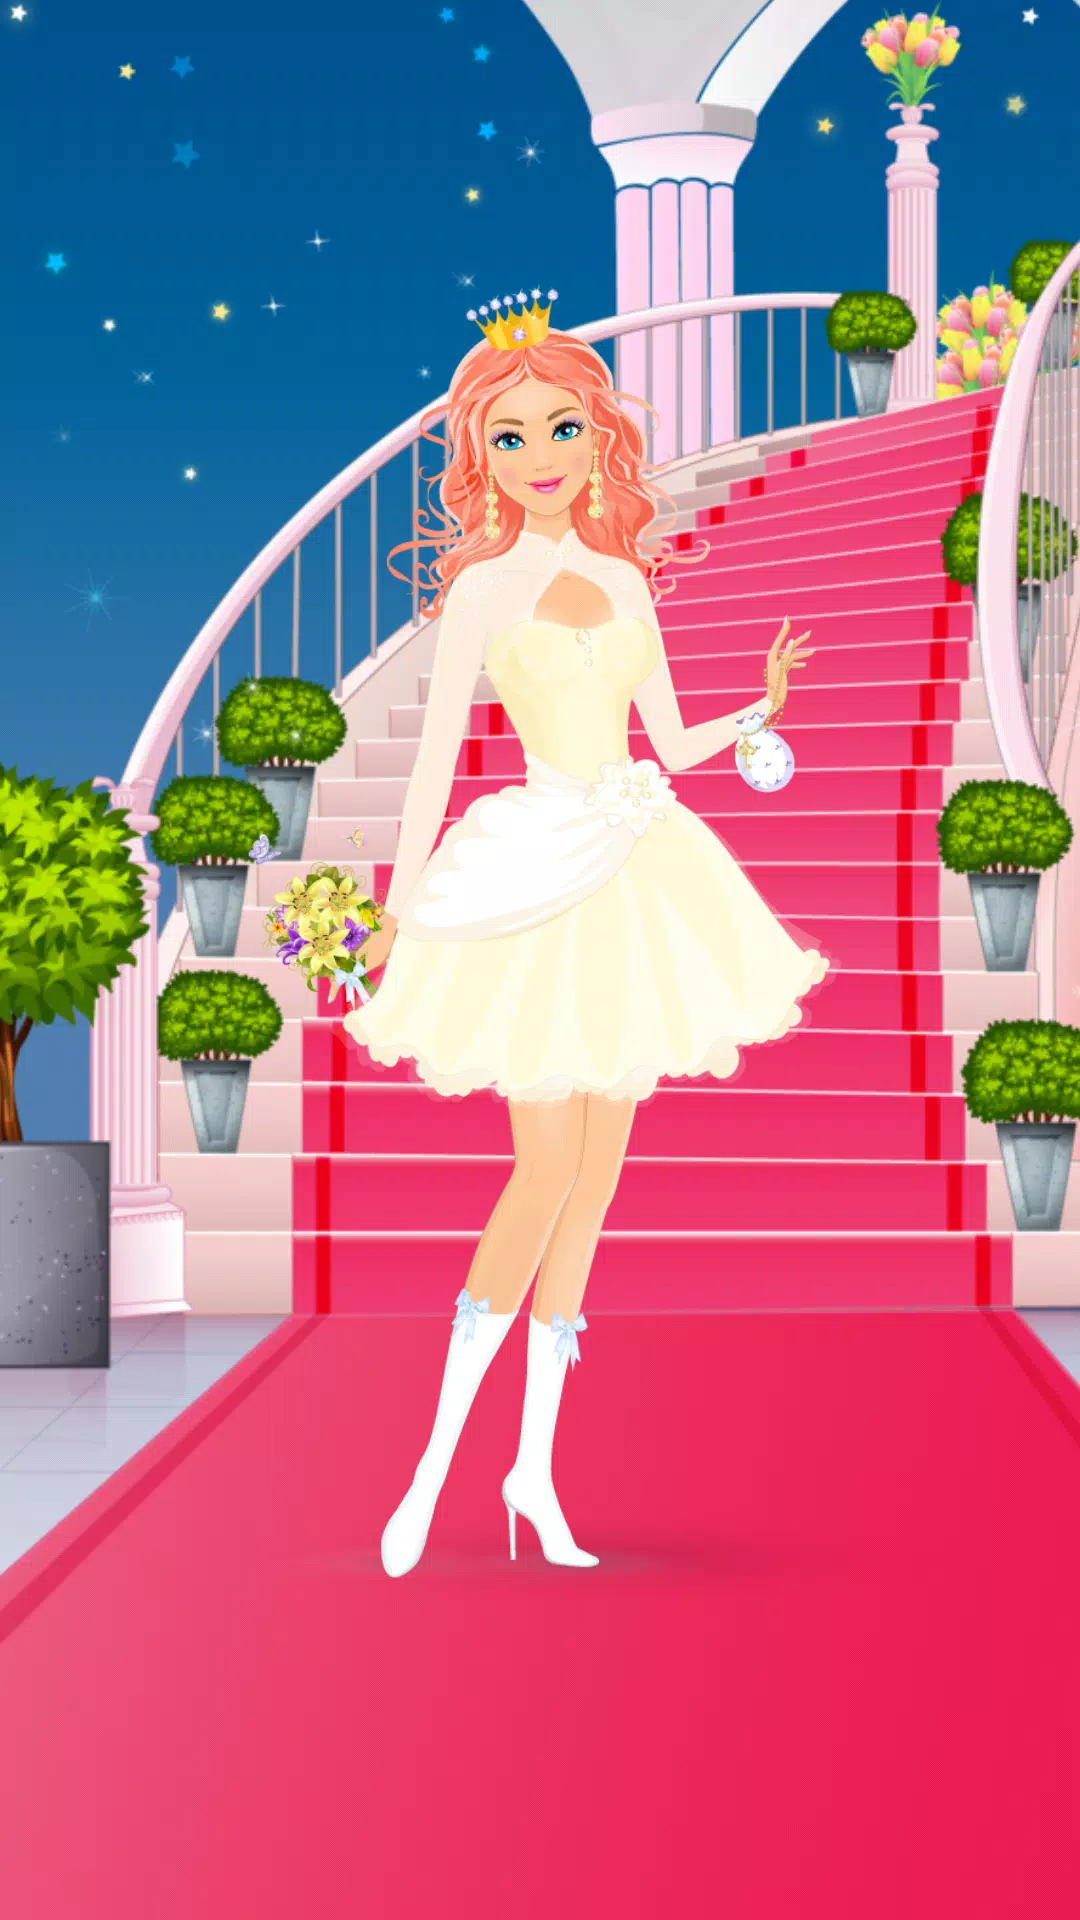 Download do APK de Jogos de princesa casamento para Android